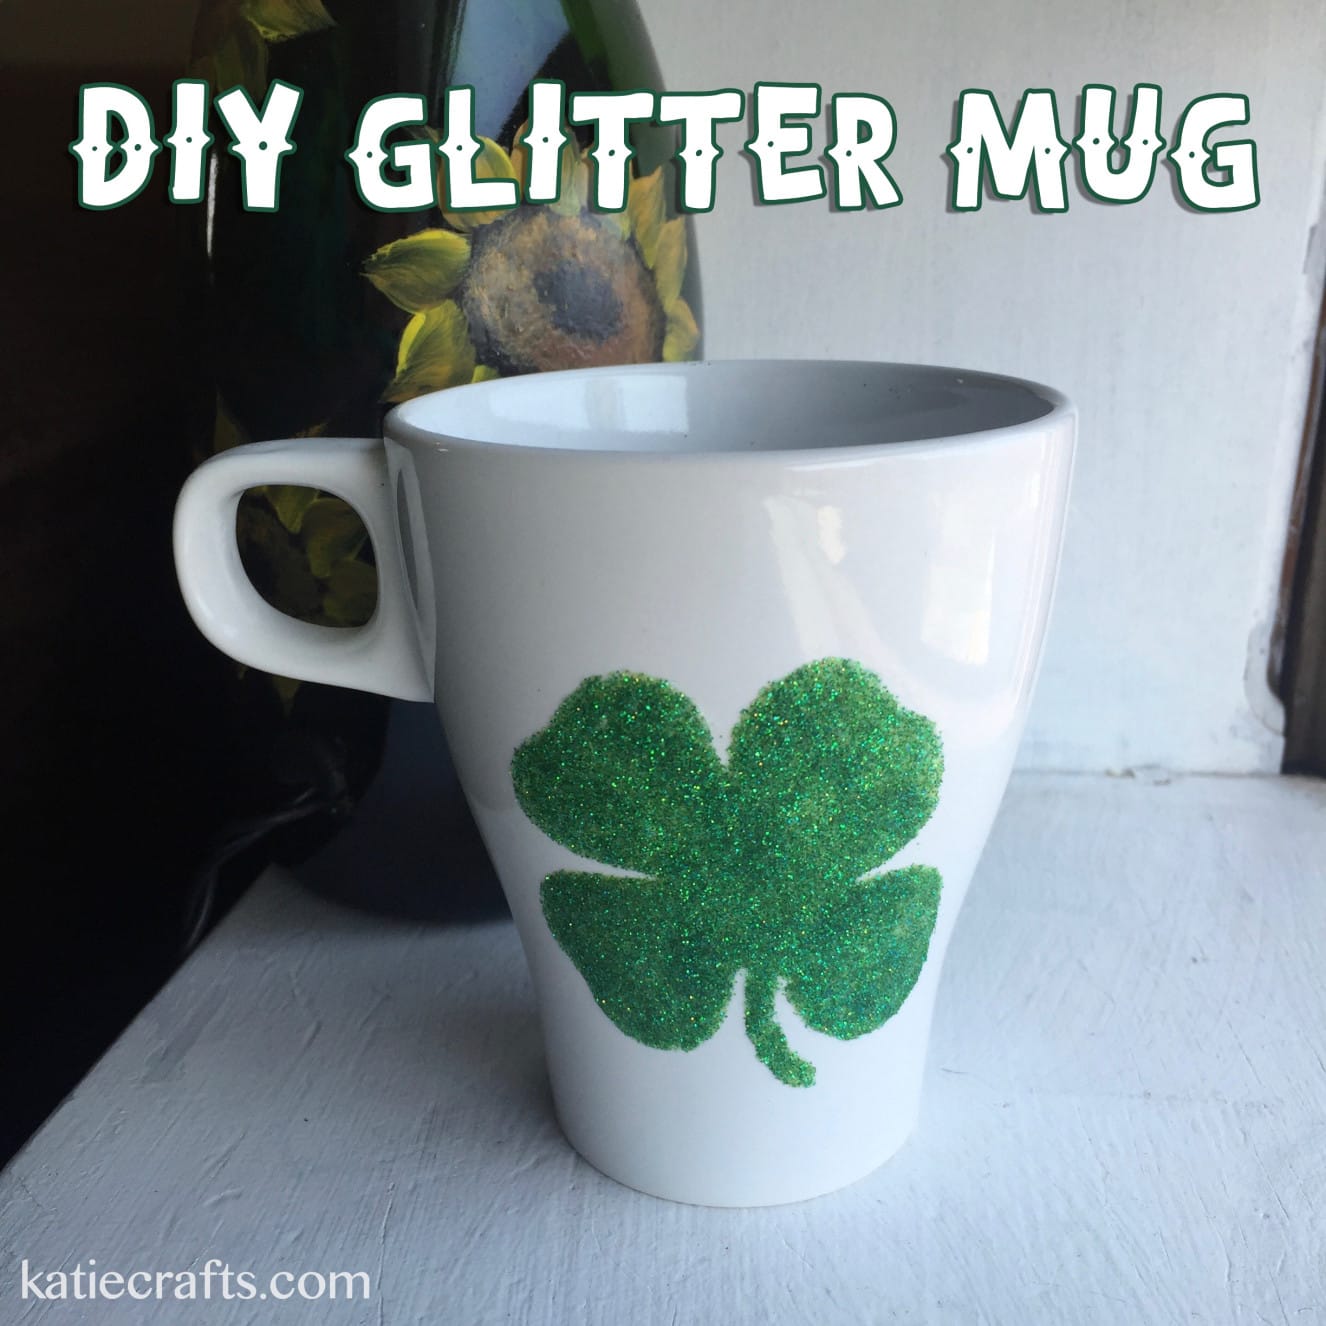 DIY Glitter Mug Tutorial on Katie Crafts; https://www.katiecrafts.com